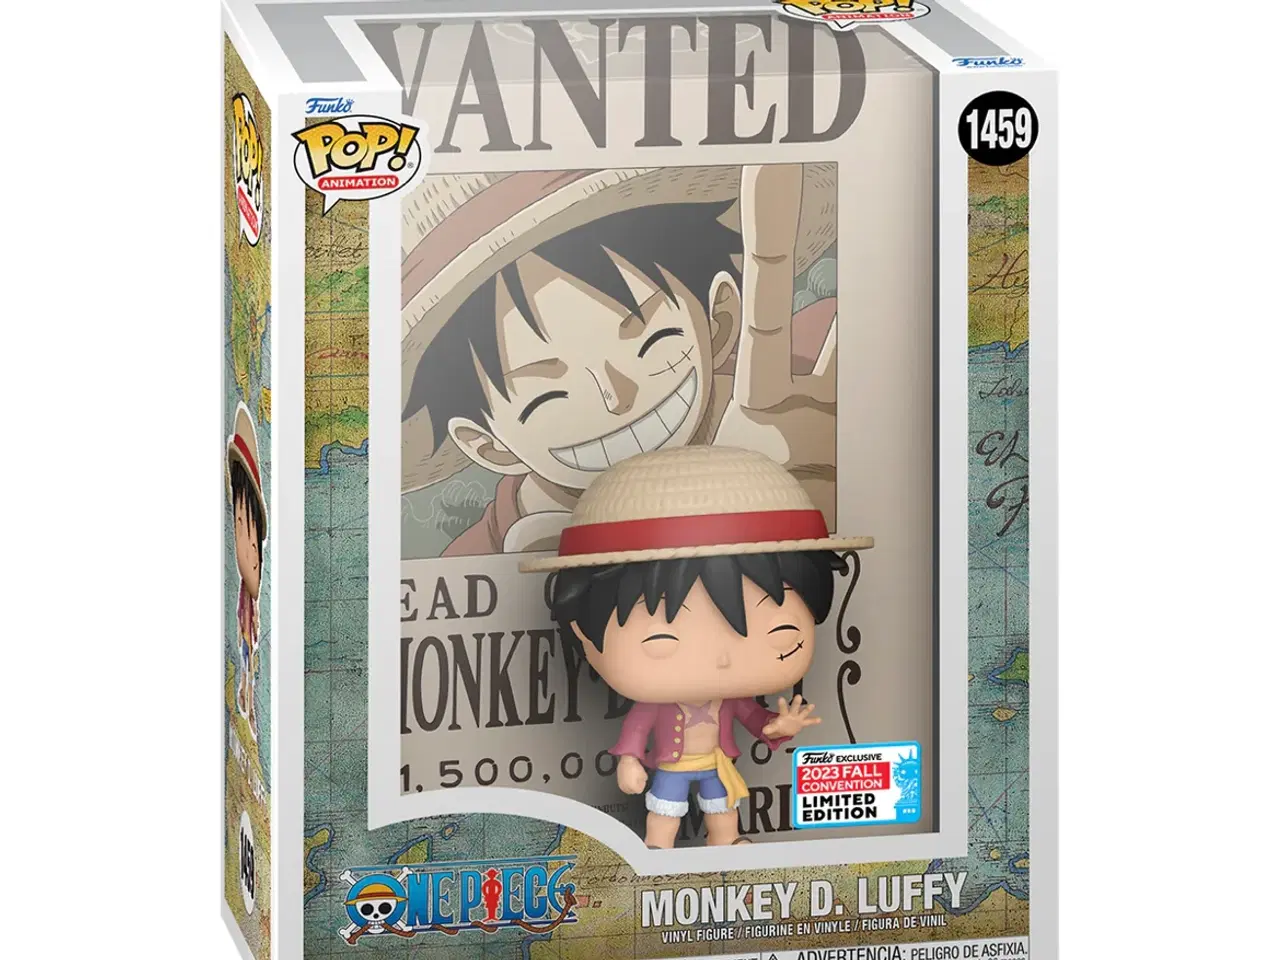 Billede 1 - Luffy wanted poster version